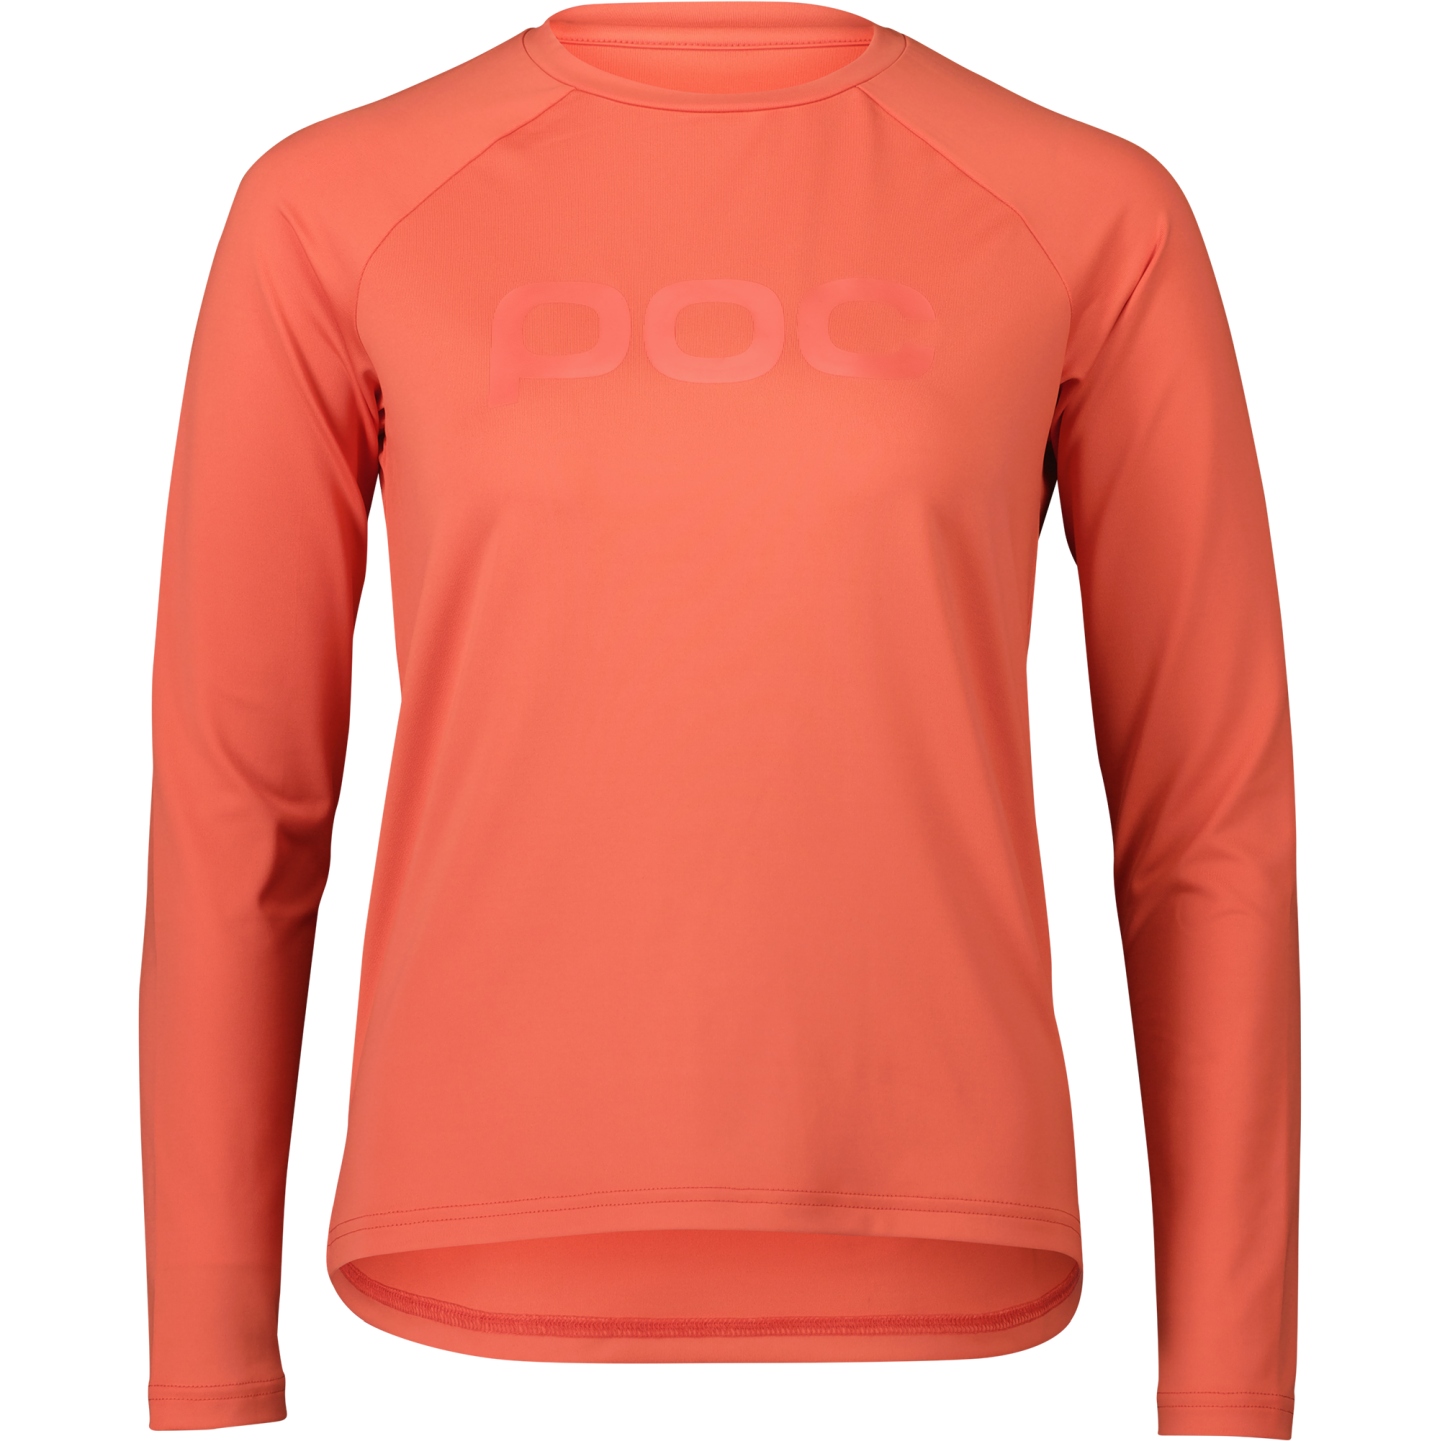 Productfoto van POC Reform Enduro Shirt Dames - 1731 Ammolite Coral